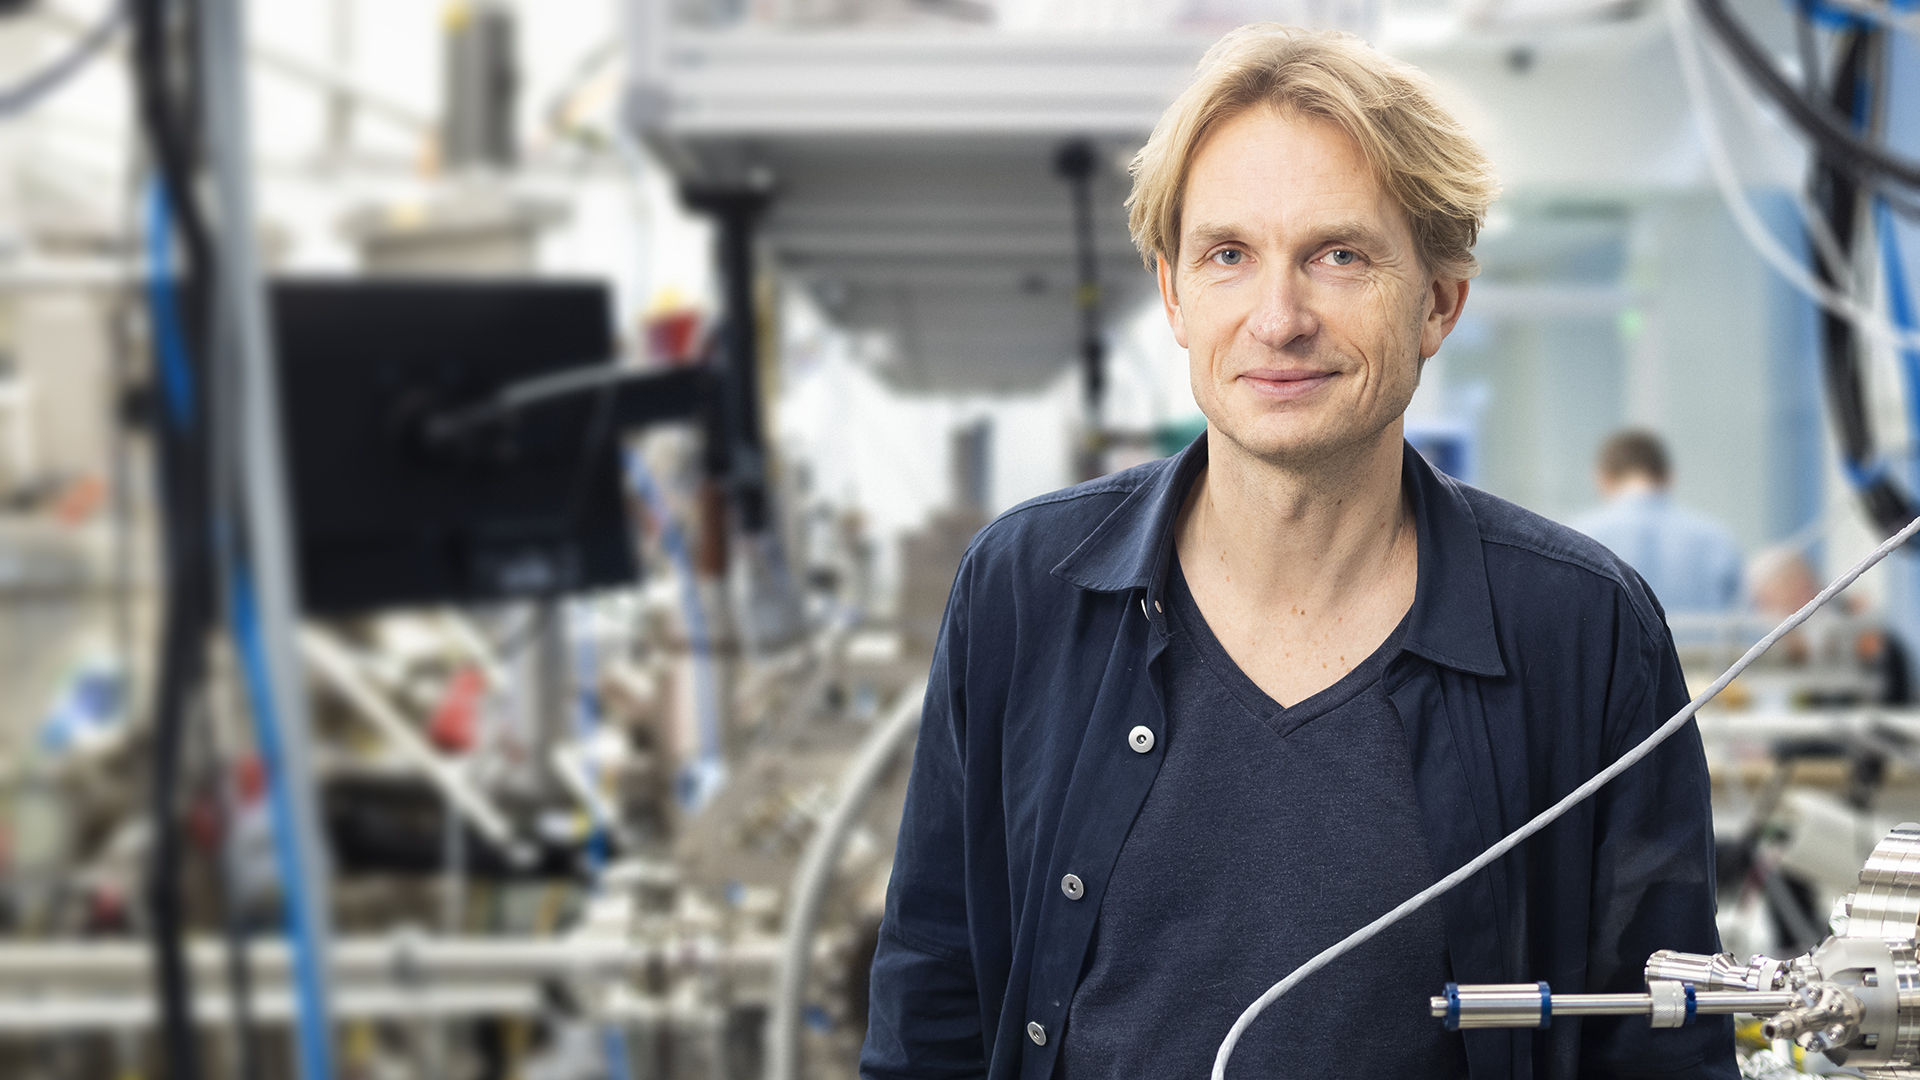 A man stands amidst quantum lab equipment